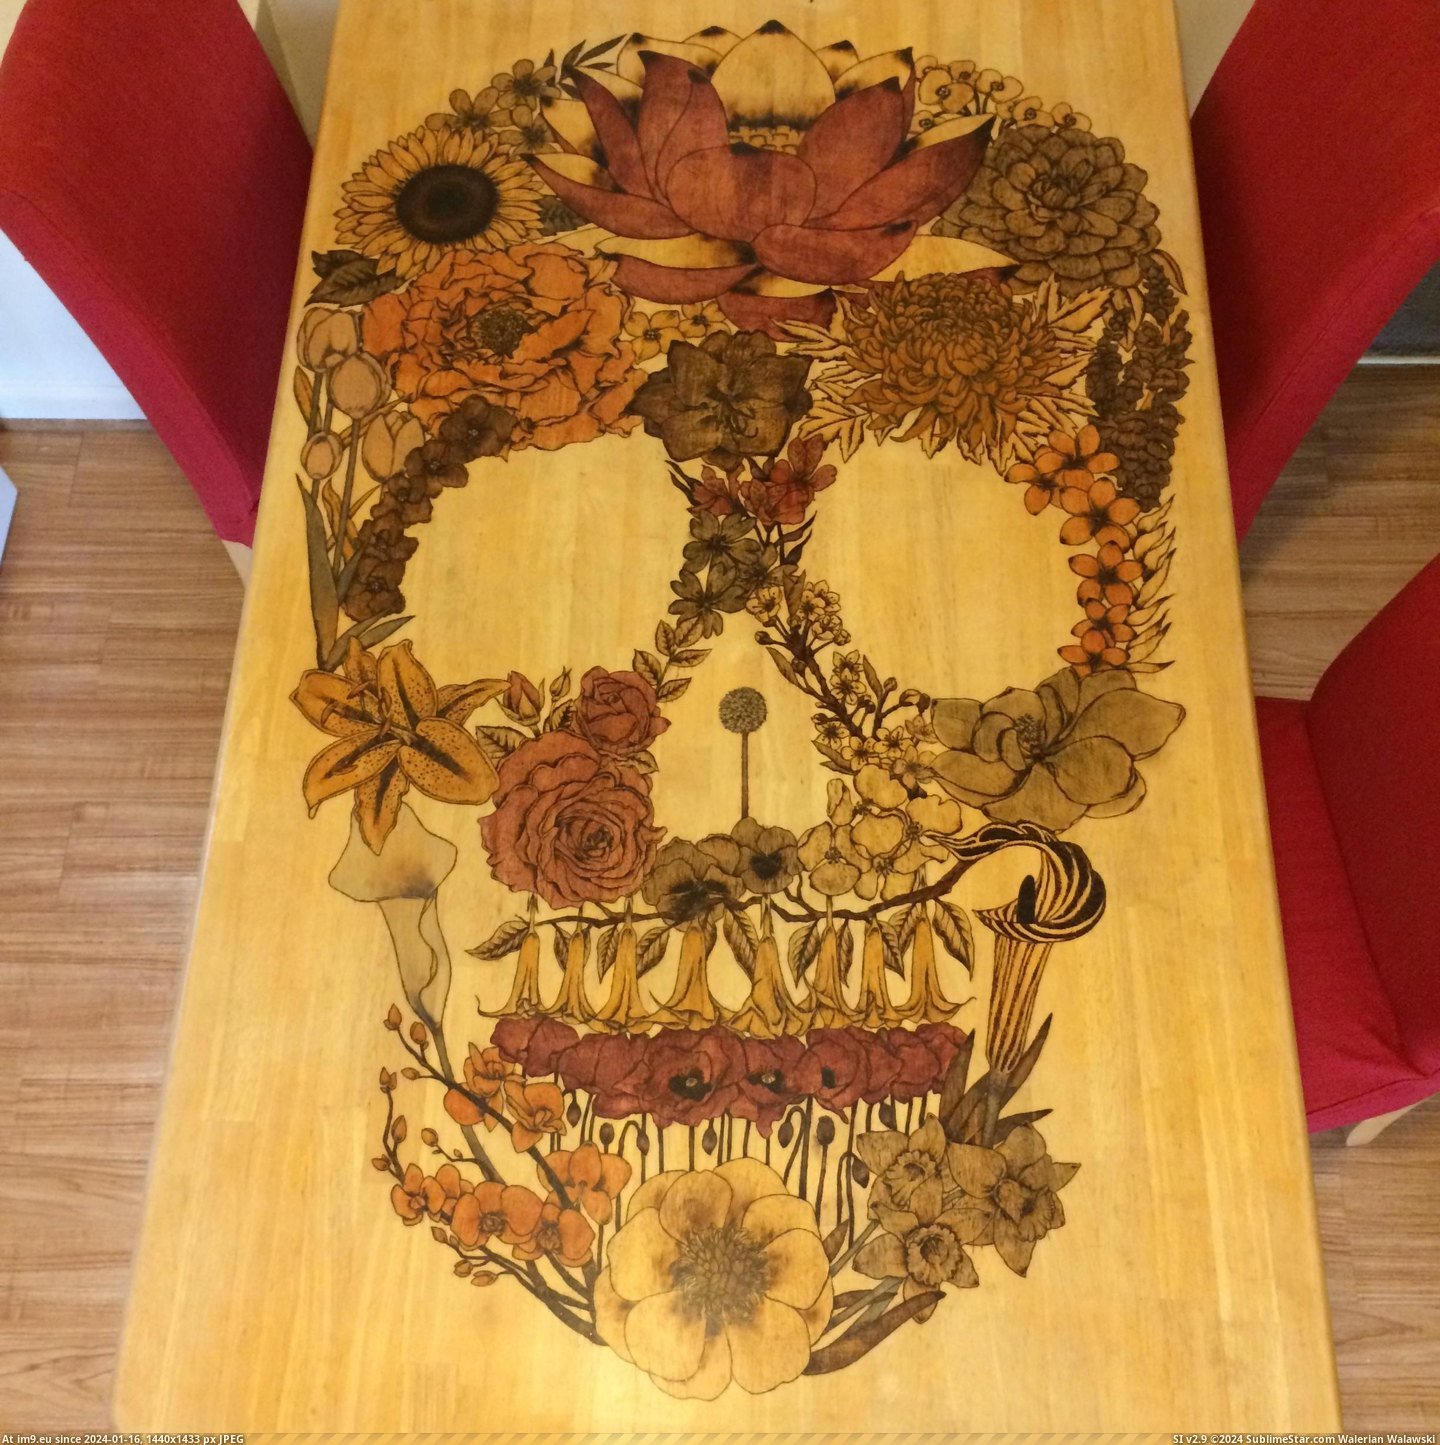 #Kitchen #Skull #Woodburning #Flower [Pics] Flower Skull Woodburning On Kitchen Table Pic. (Image of album My r/PICS favs))